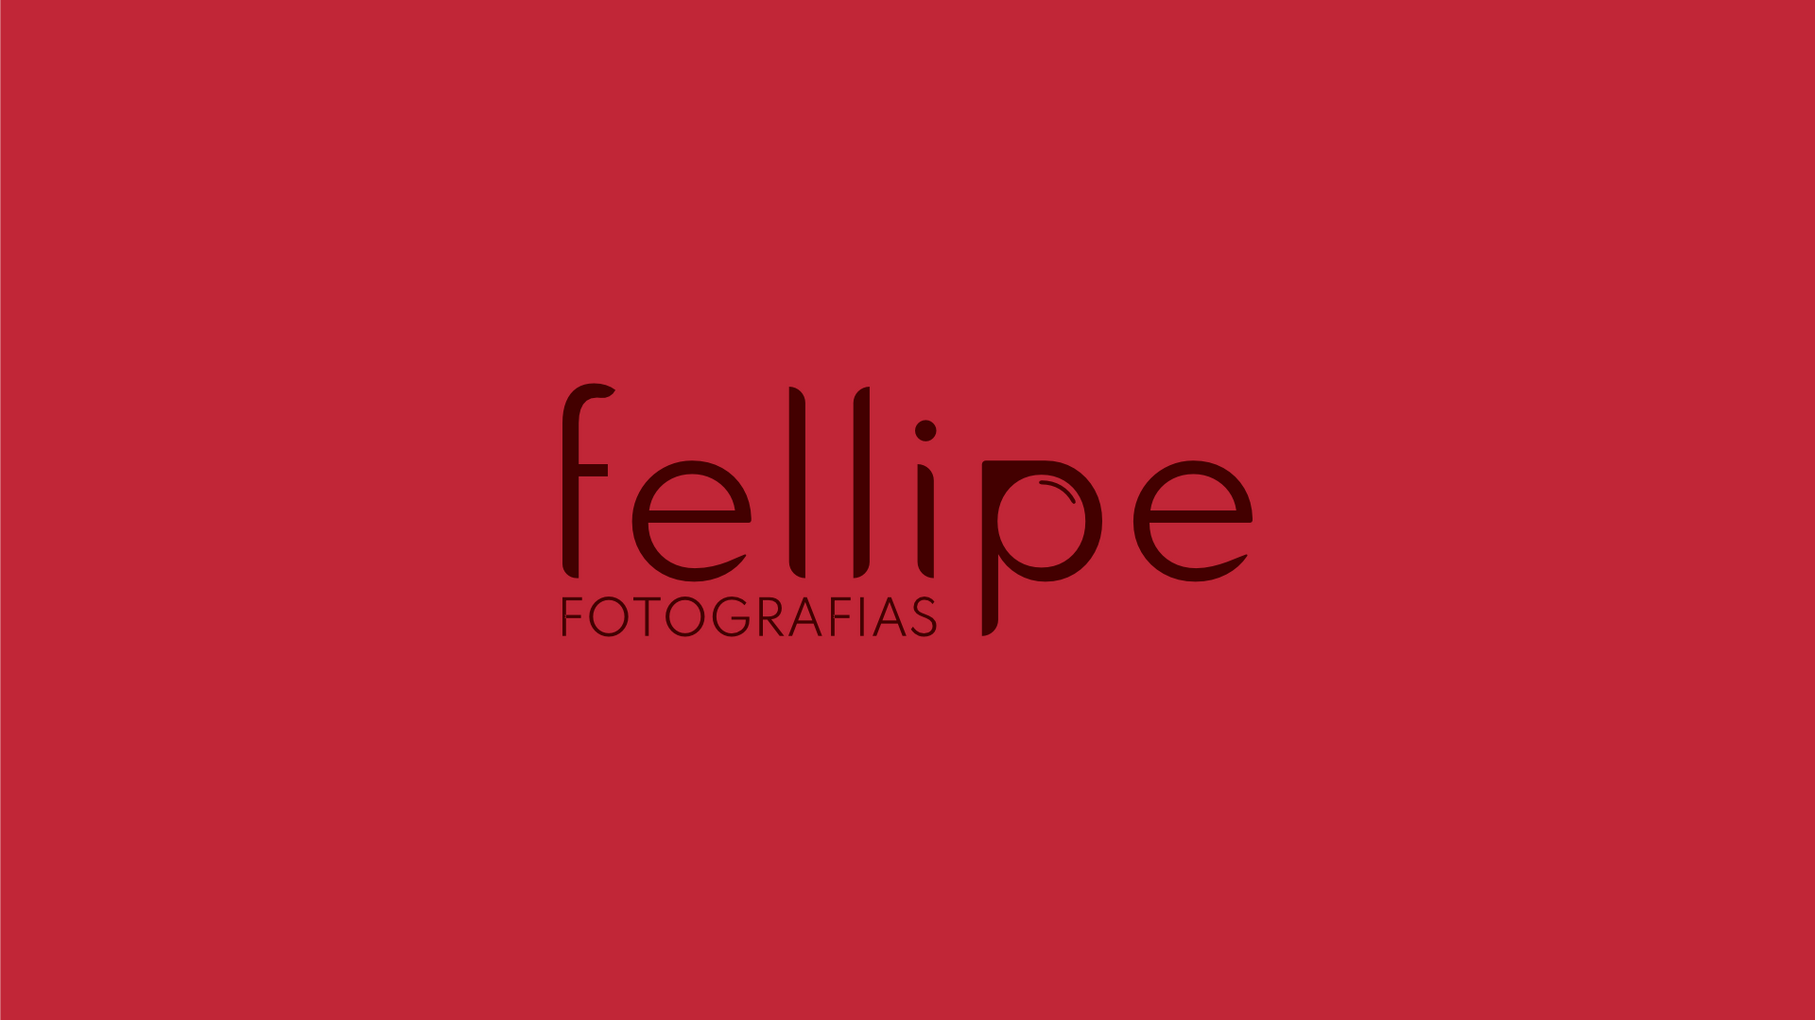 Fellipe Fotografias